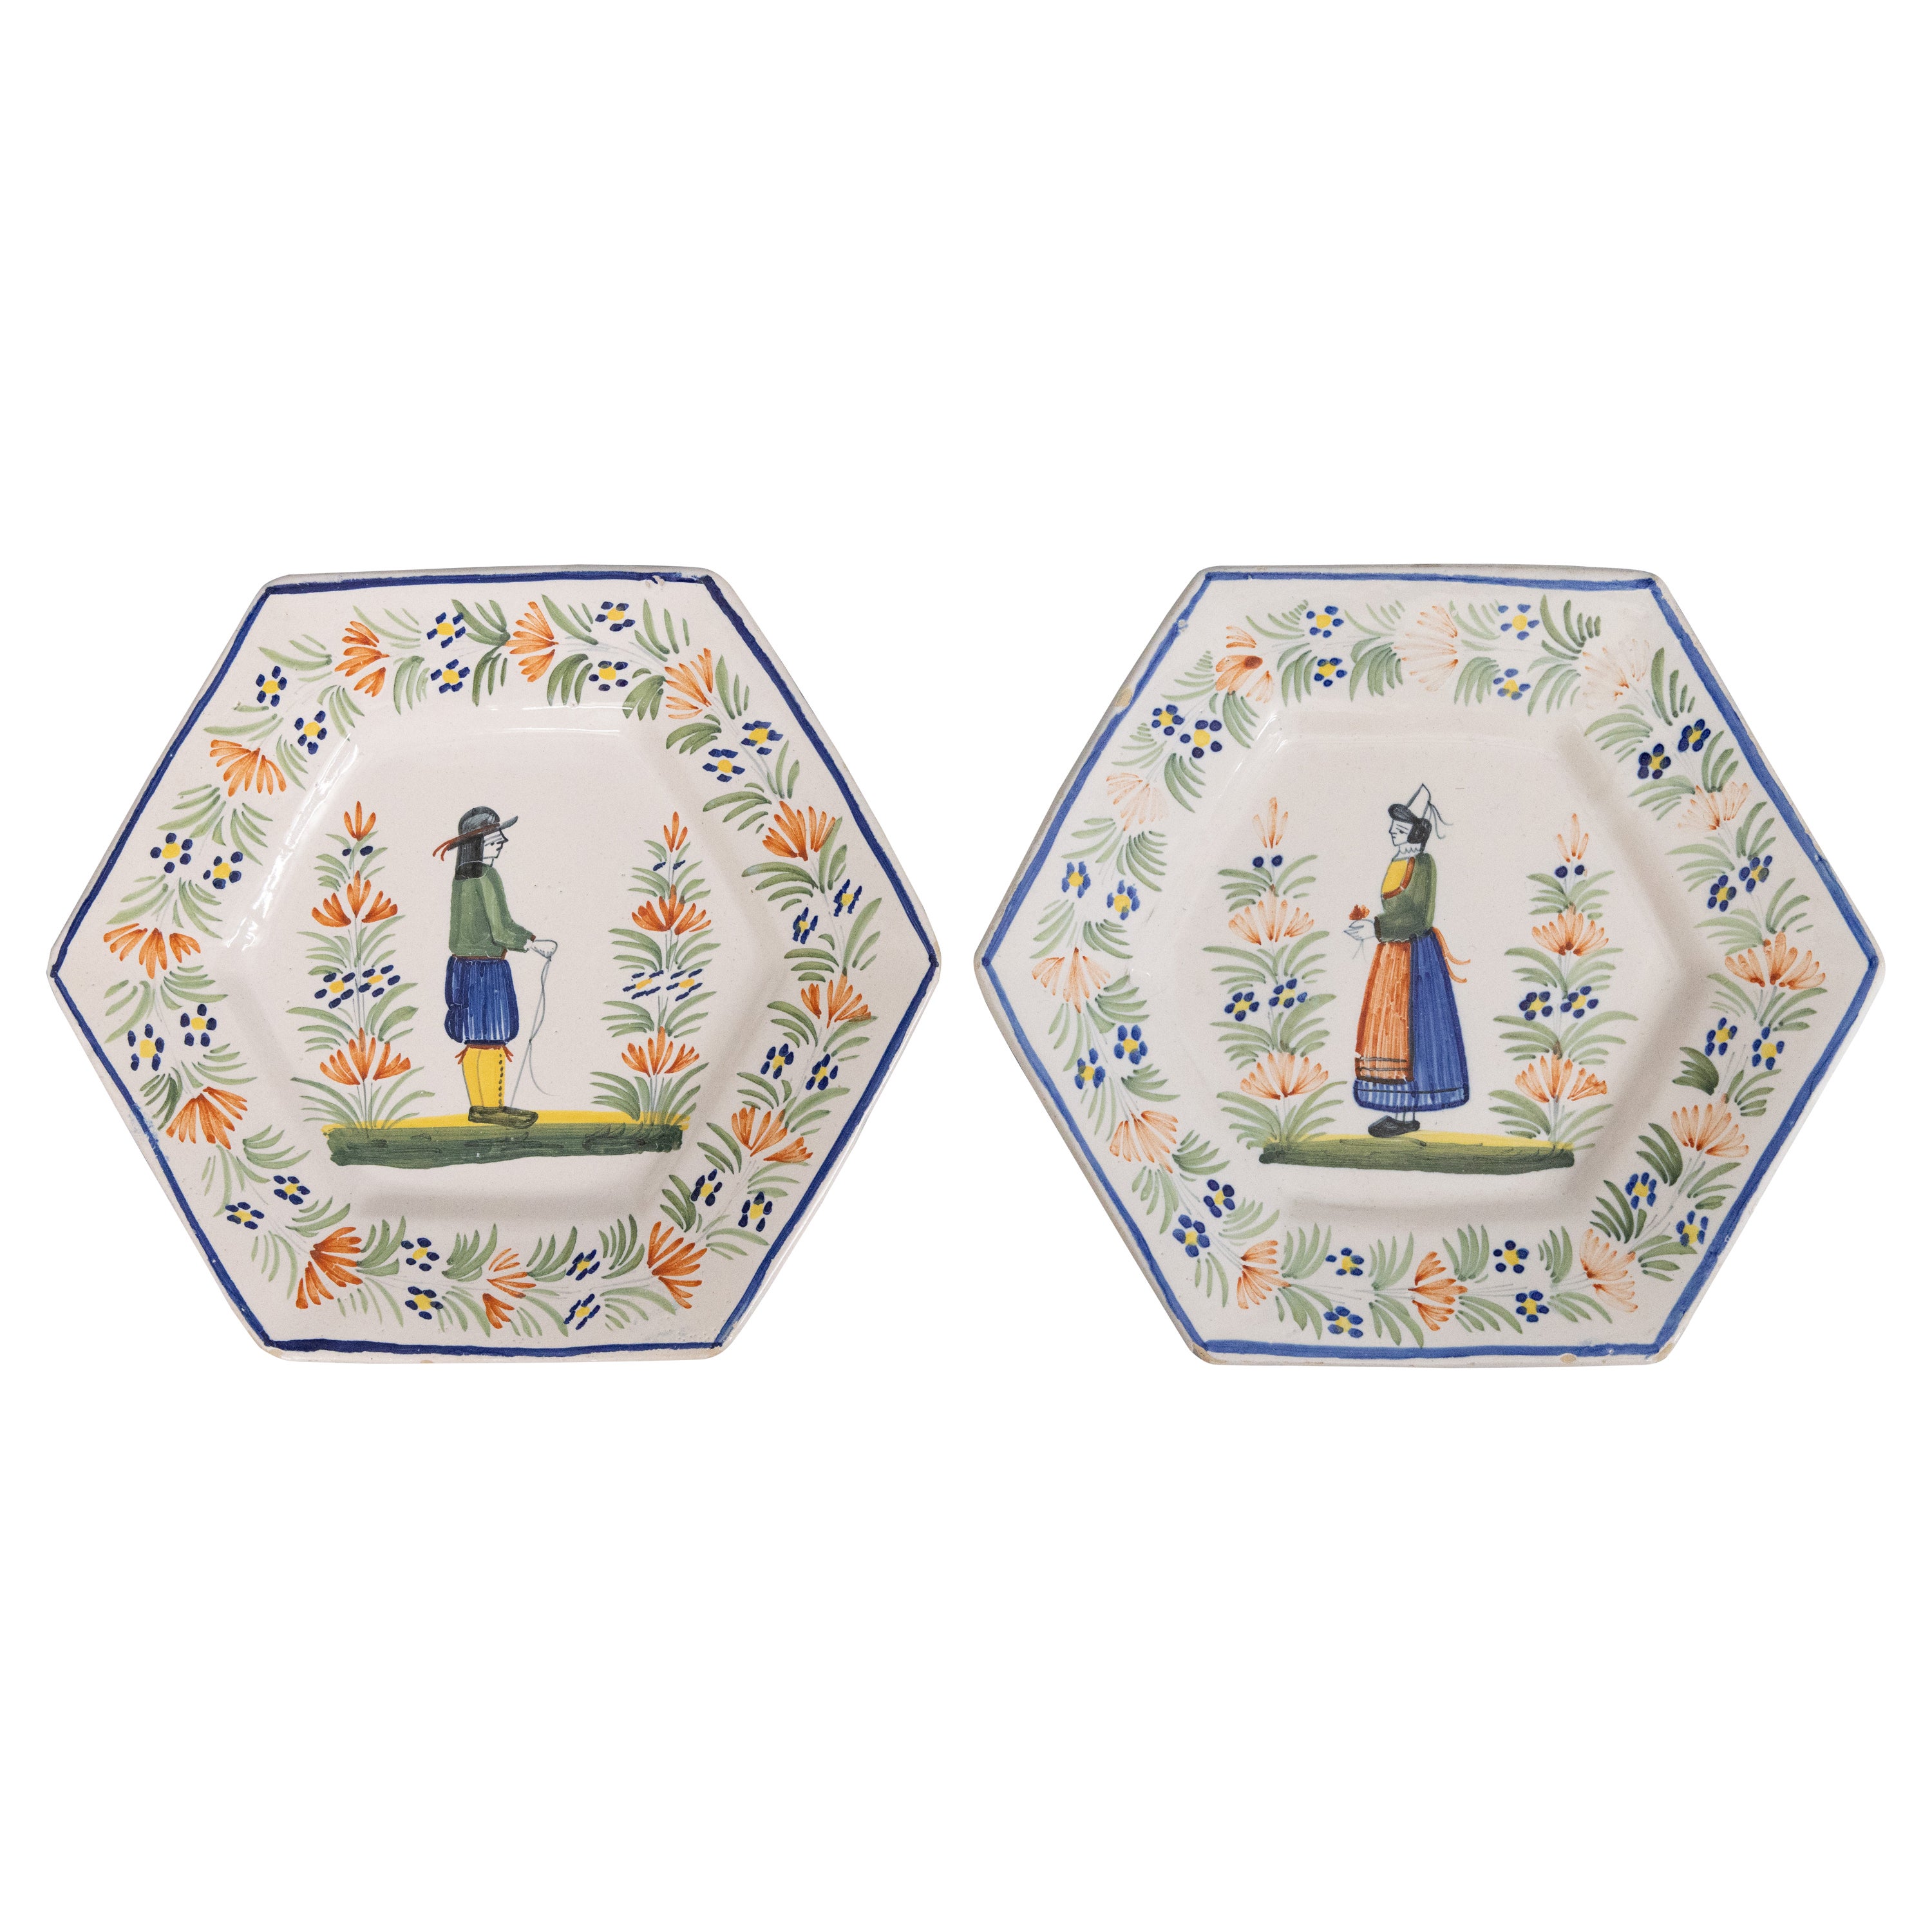 Pair of Antique Hexagonal French Faience Quimper Plates, circa 1900